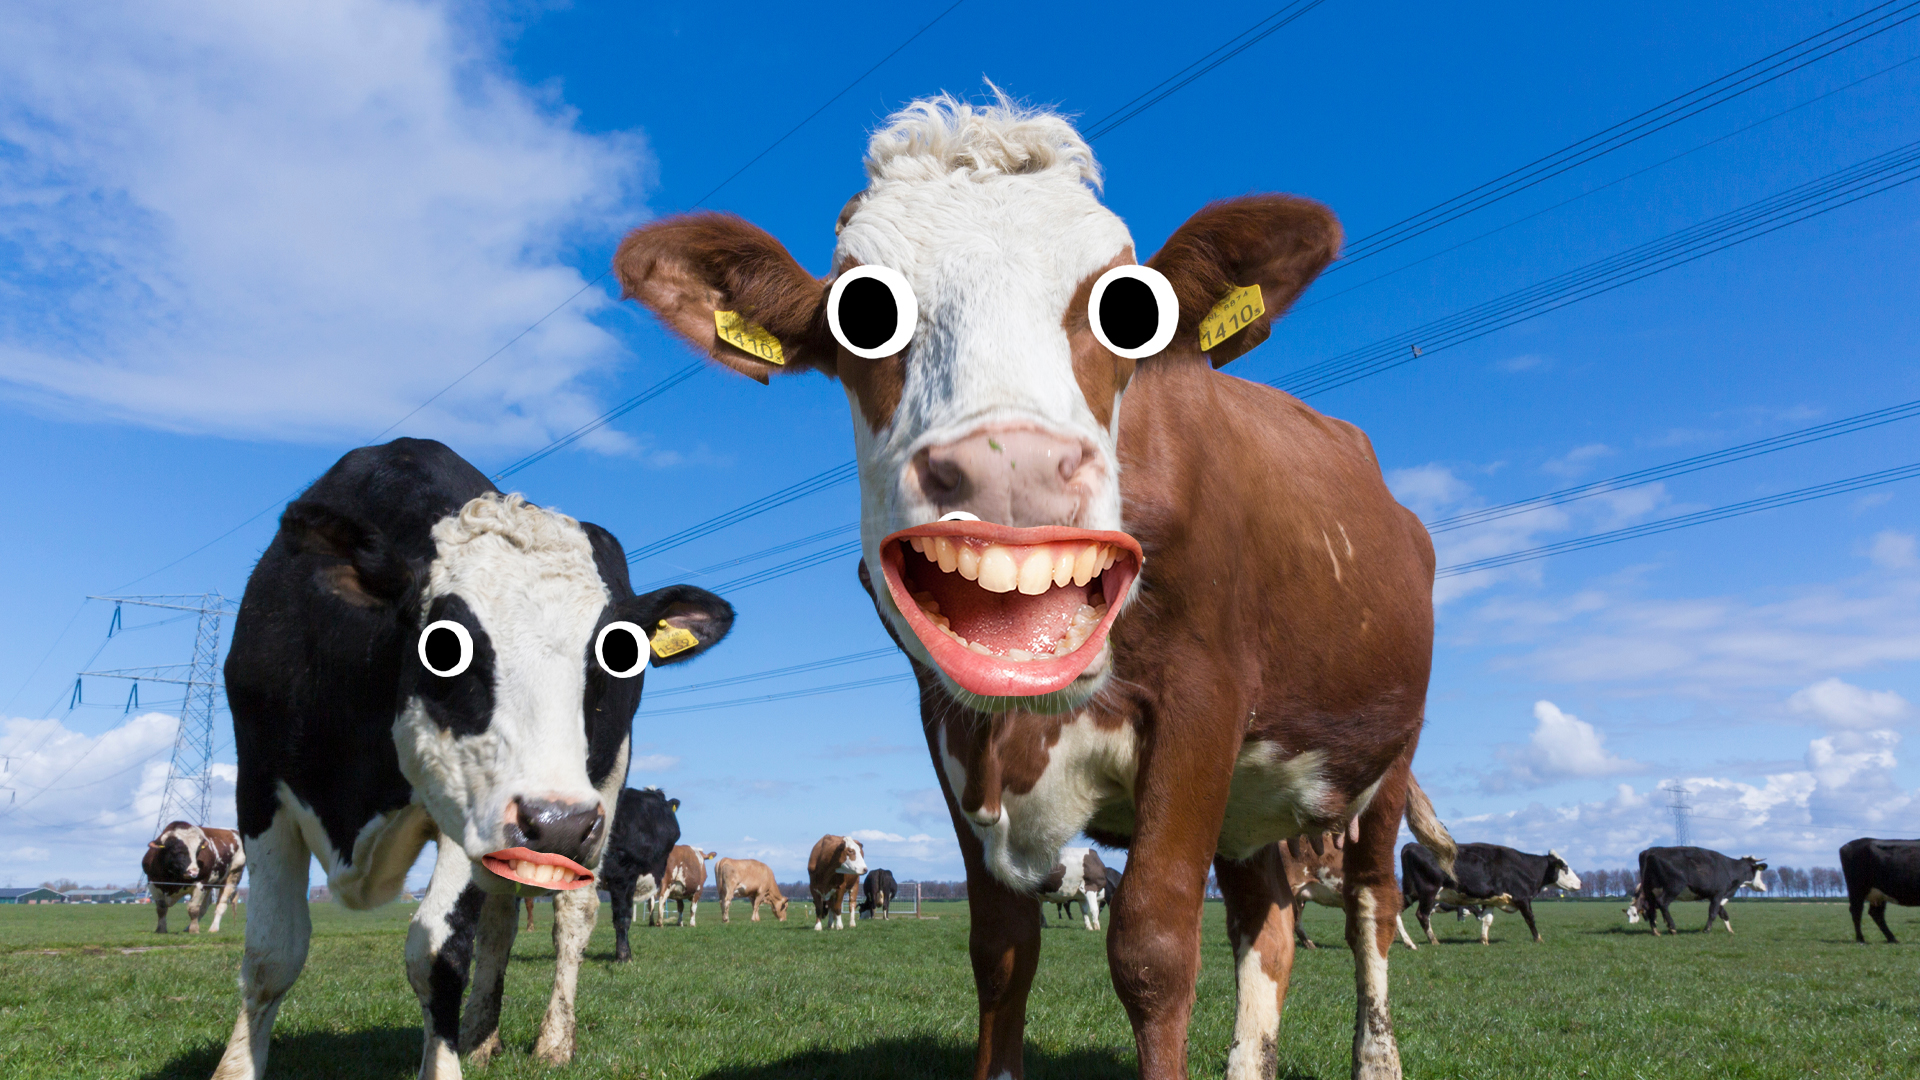 Some cows enjoying a funny joke